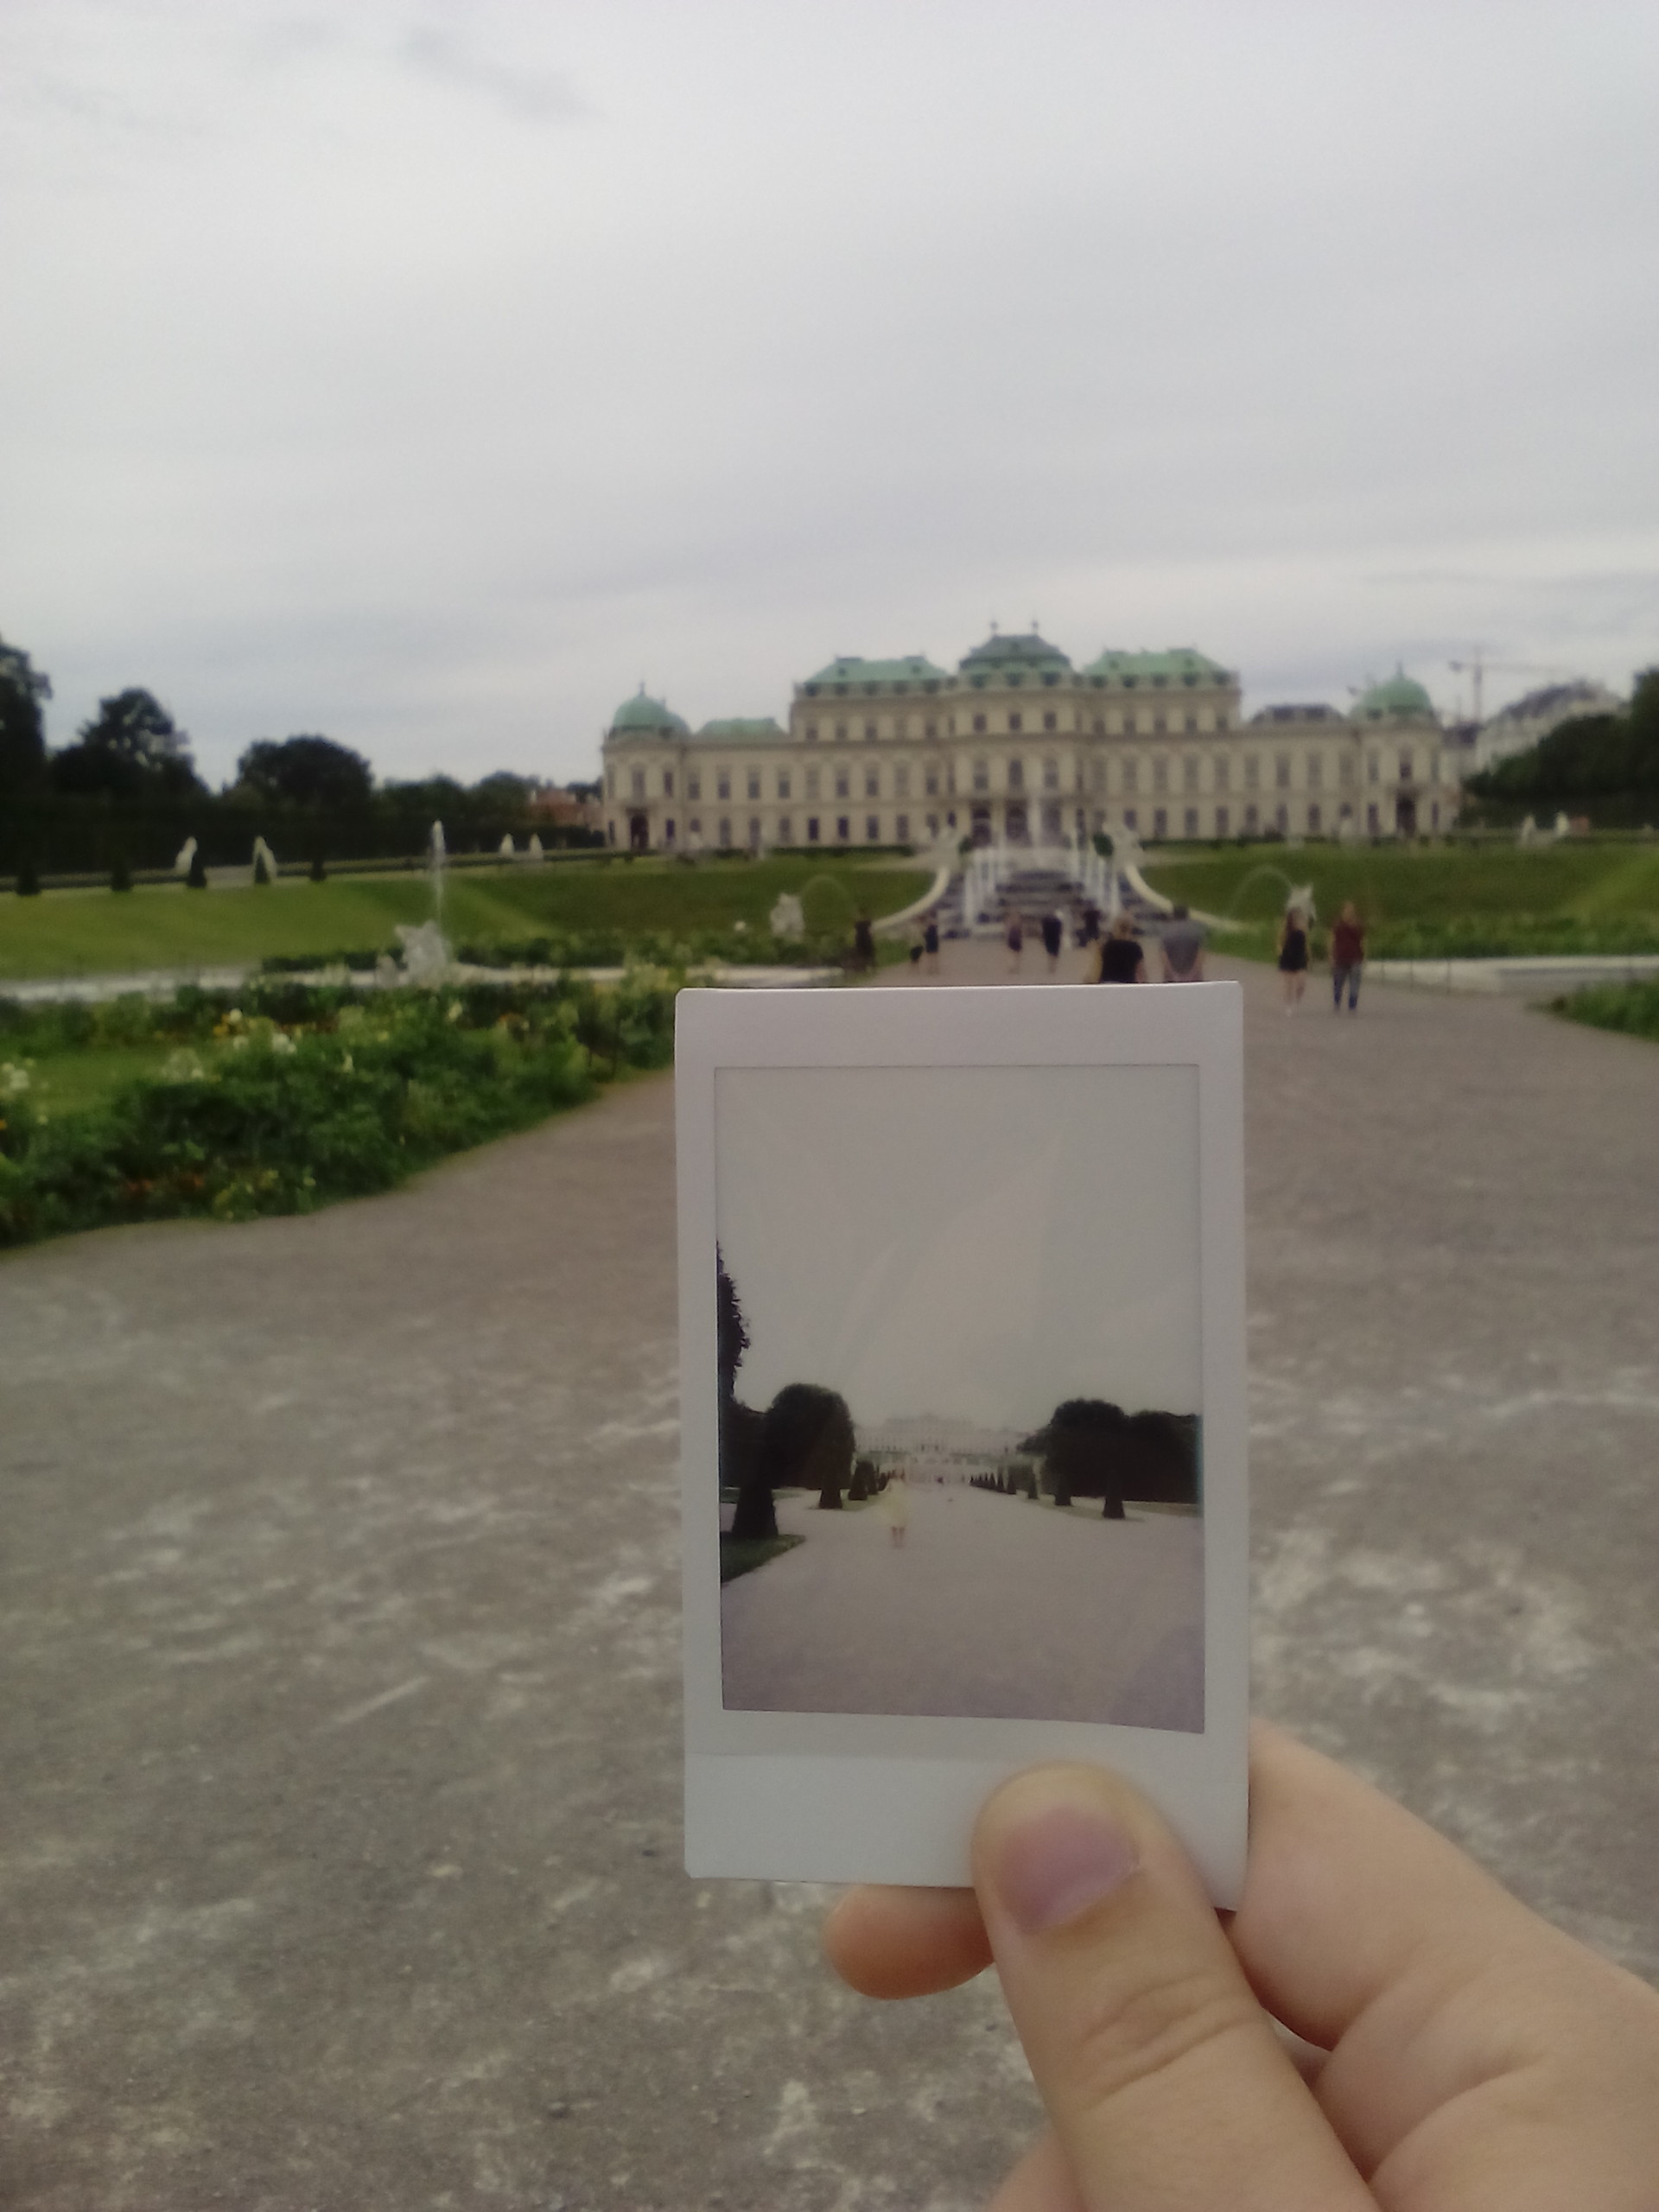 art-beauty-belvedere-palace-5b019cca64e5